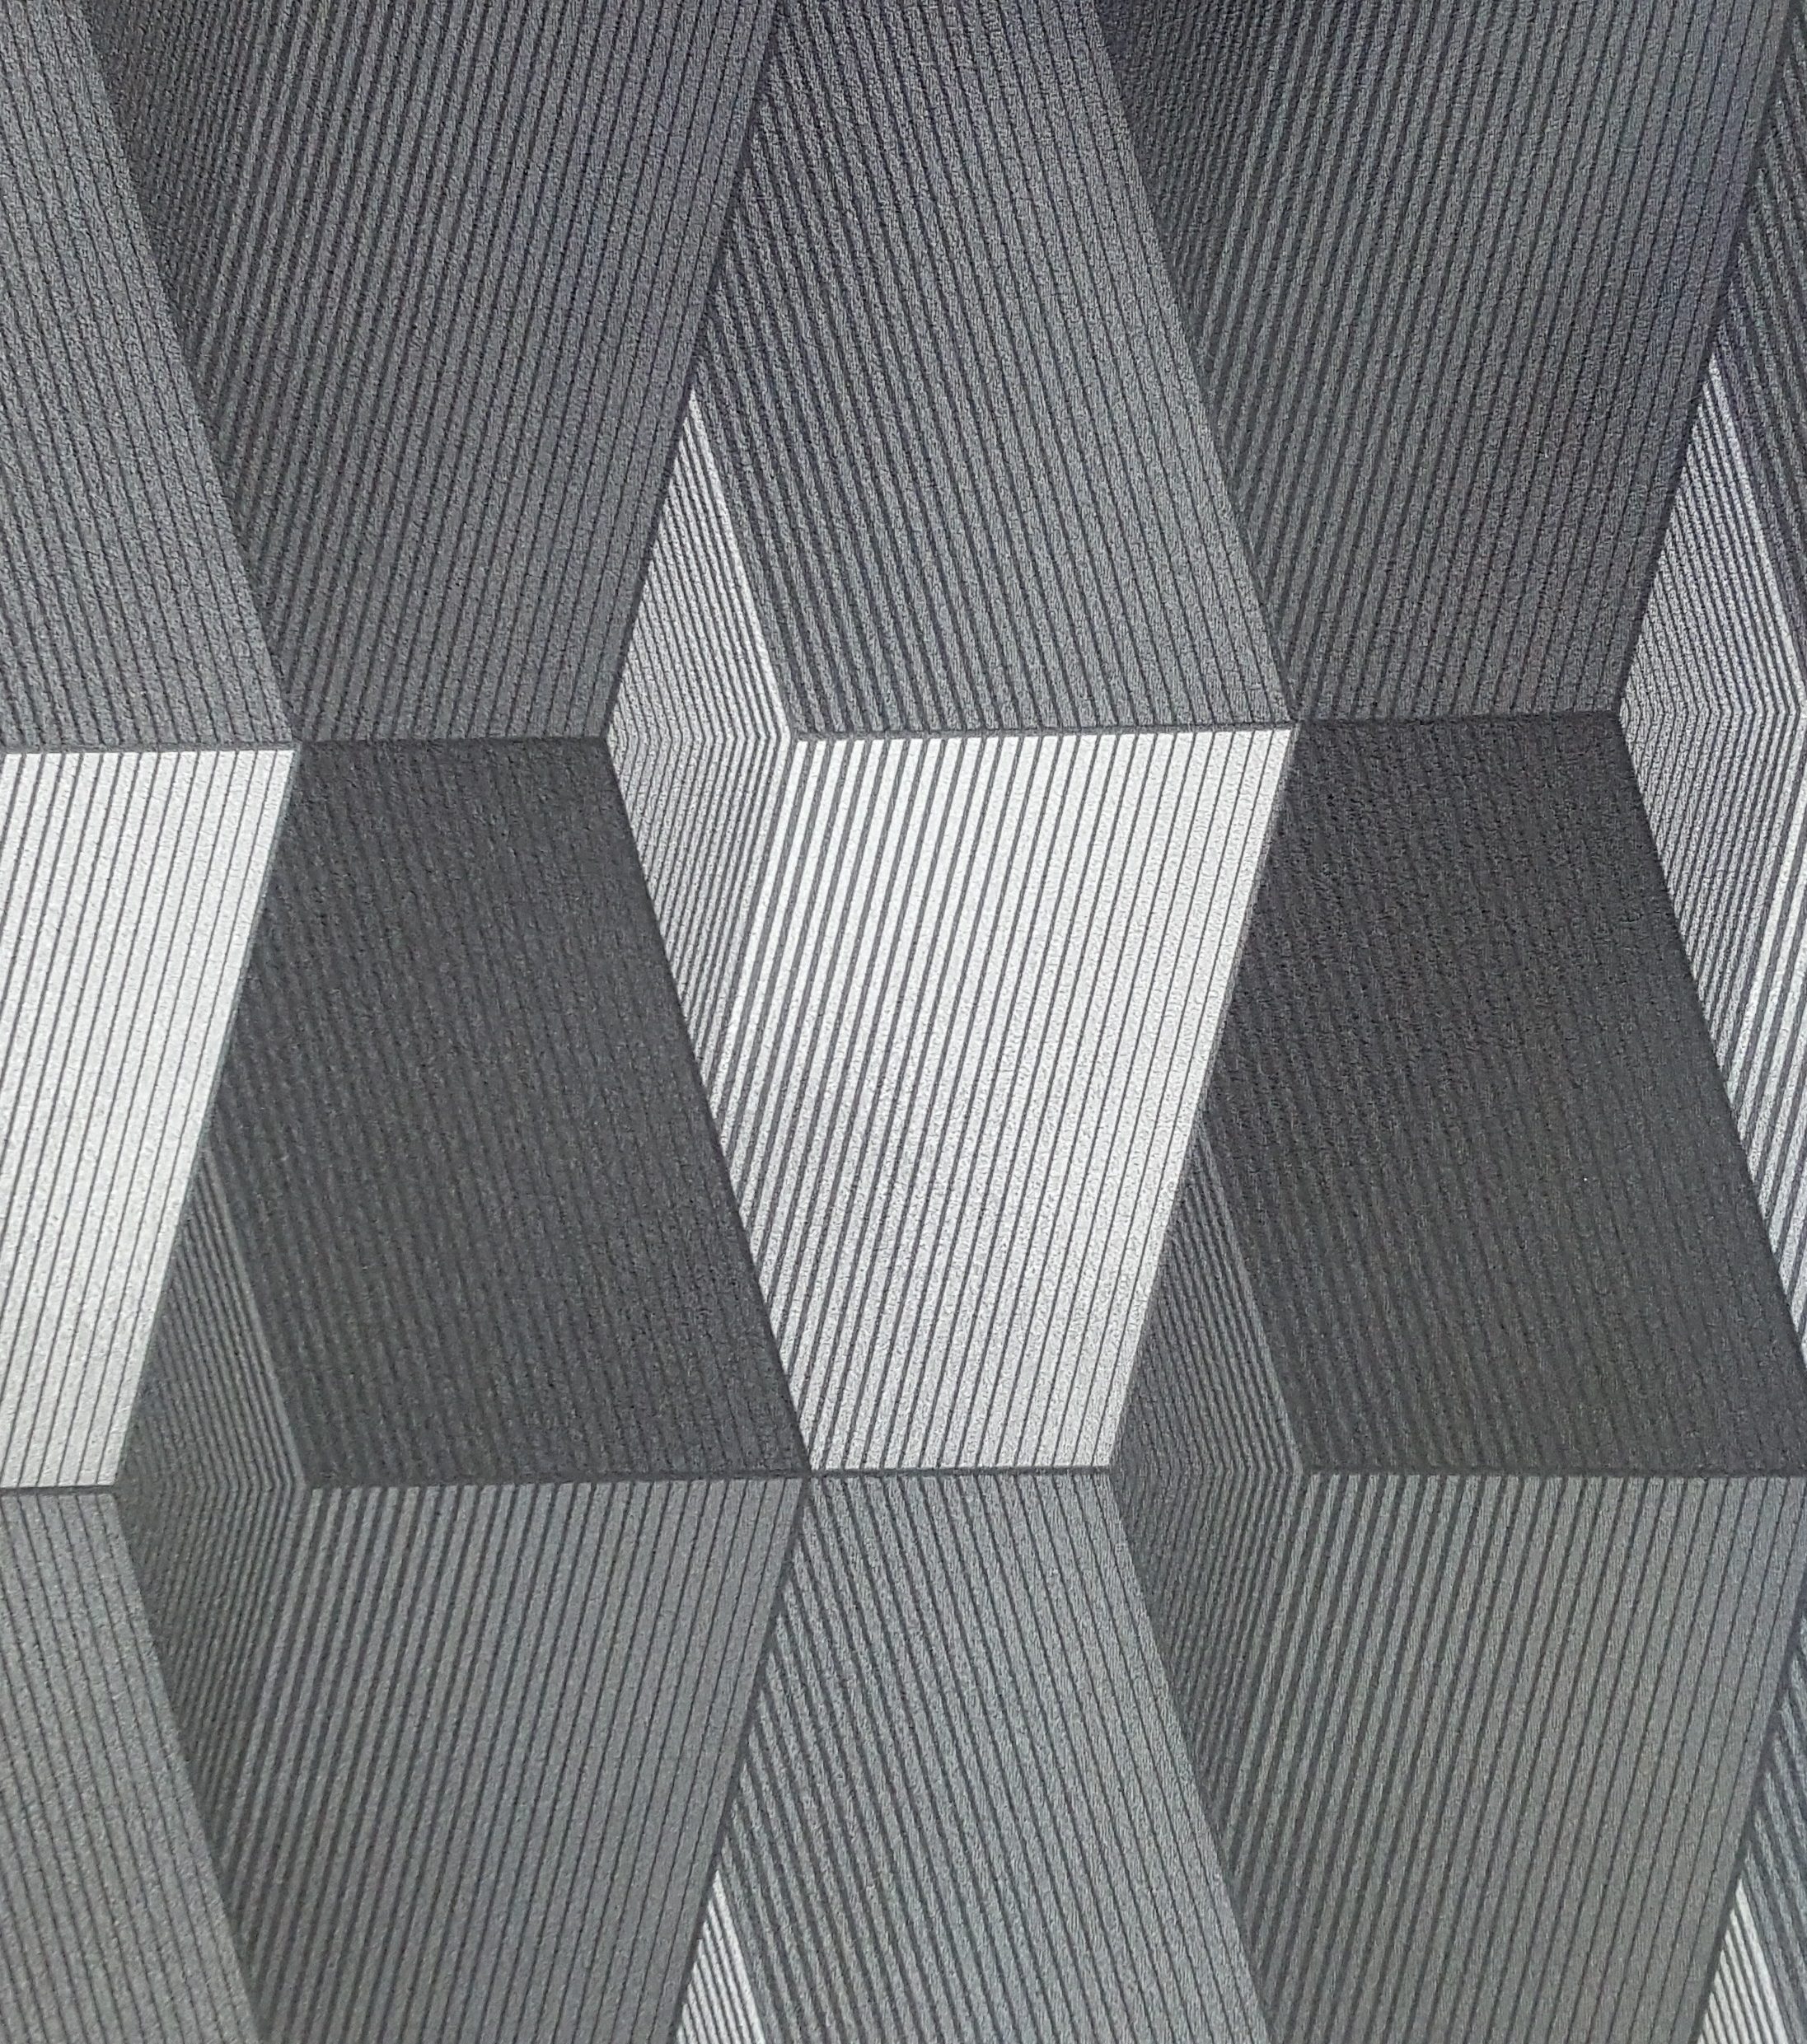 Light and Dark Grey Modern 3d patterned Wallpaper x156-3033 - Decor City